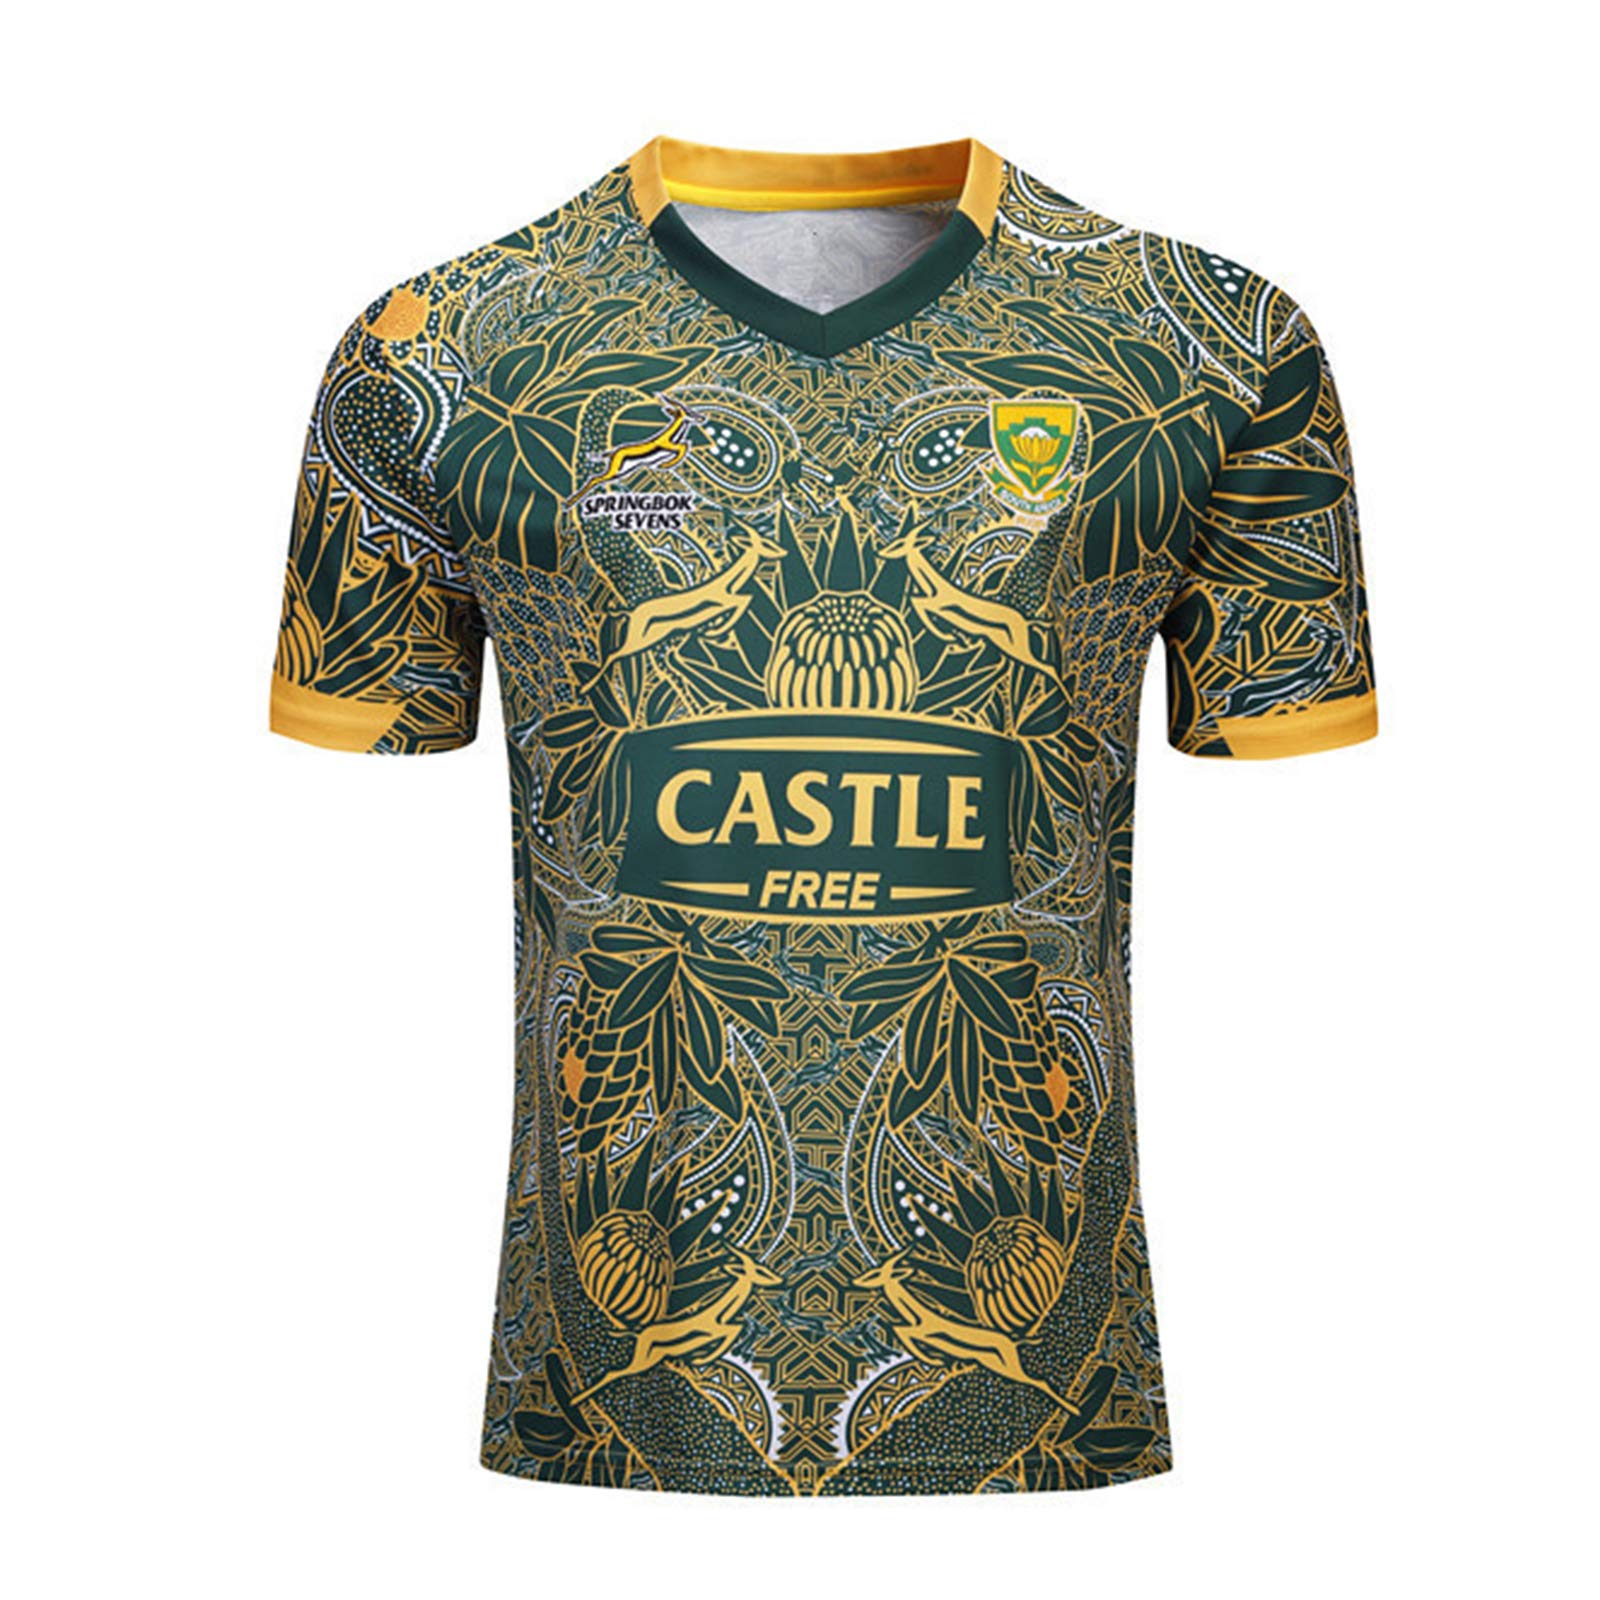 2020 Südafrika Springbok 7S Rugby Jersey-WM 2019 Aus Baumwoll-Jersey-Grafik-T-Shirt 100. Anniversary Edition Fans T-Shirts Kurzarm Trainingssportkleidung Polo-Hemd XXL